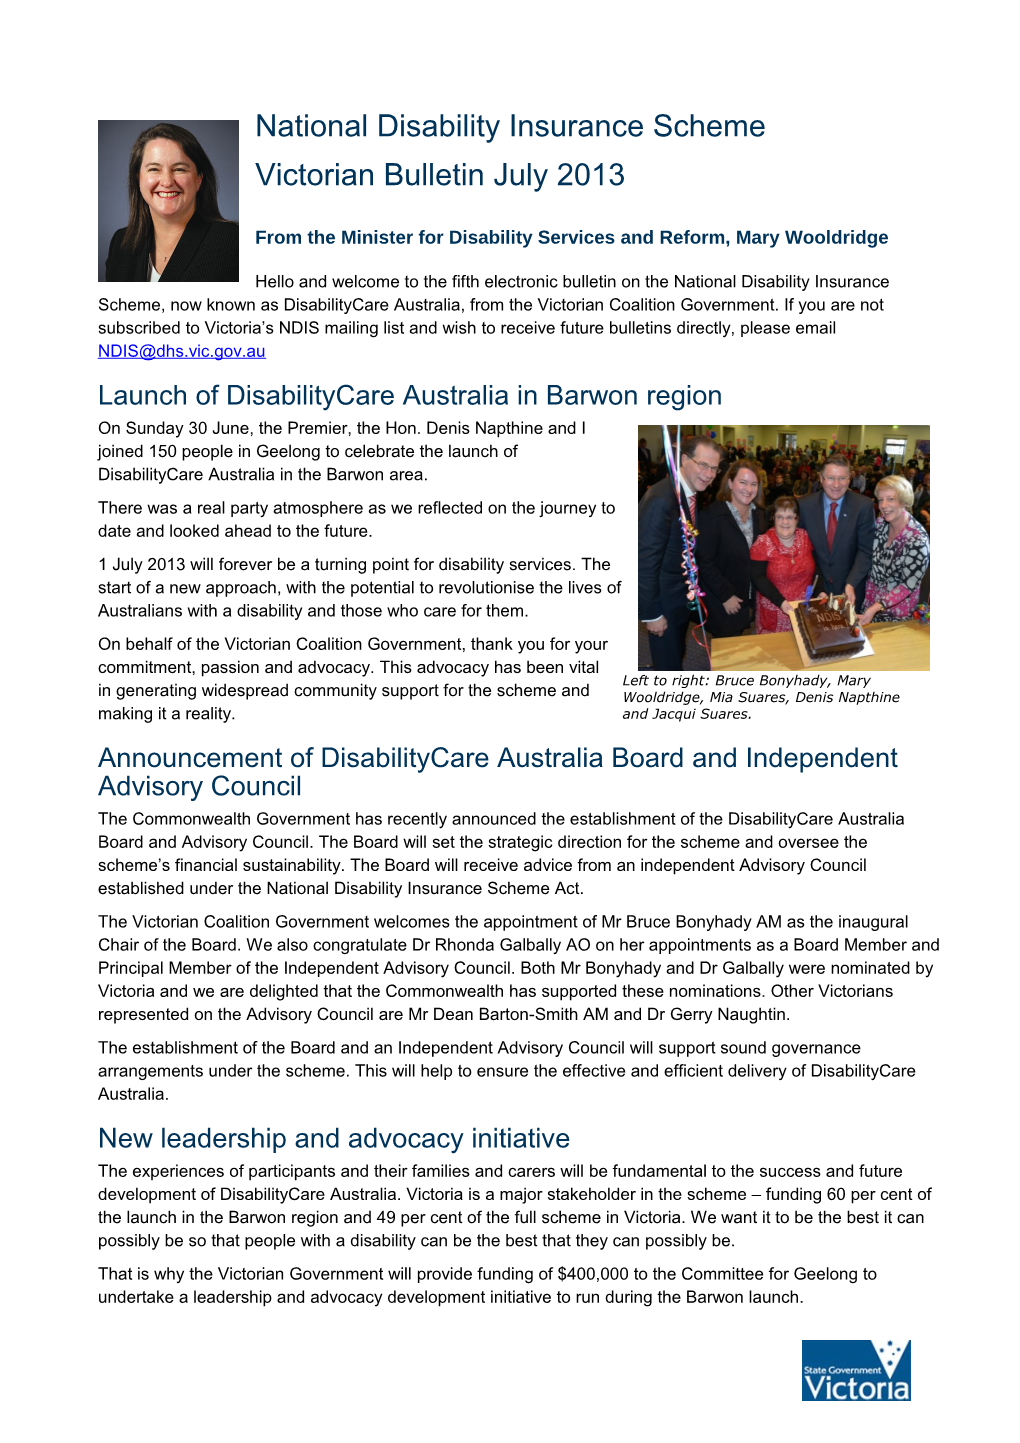 National Disability Insurance Scheme Victorian E-Bulletin, March 2013